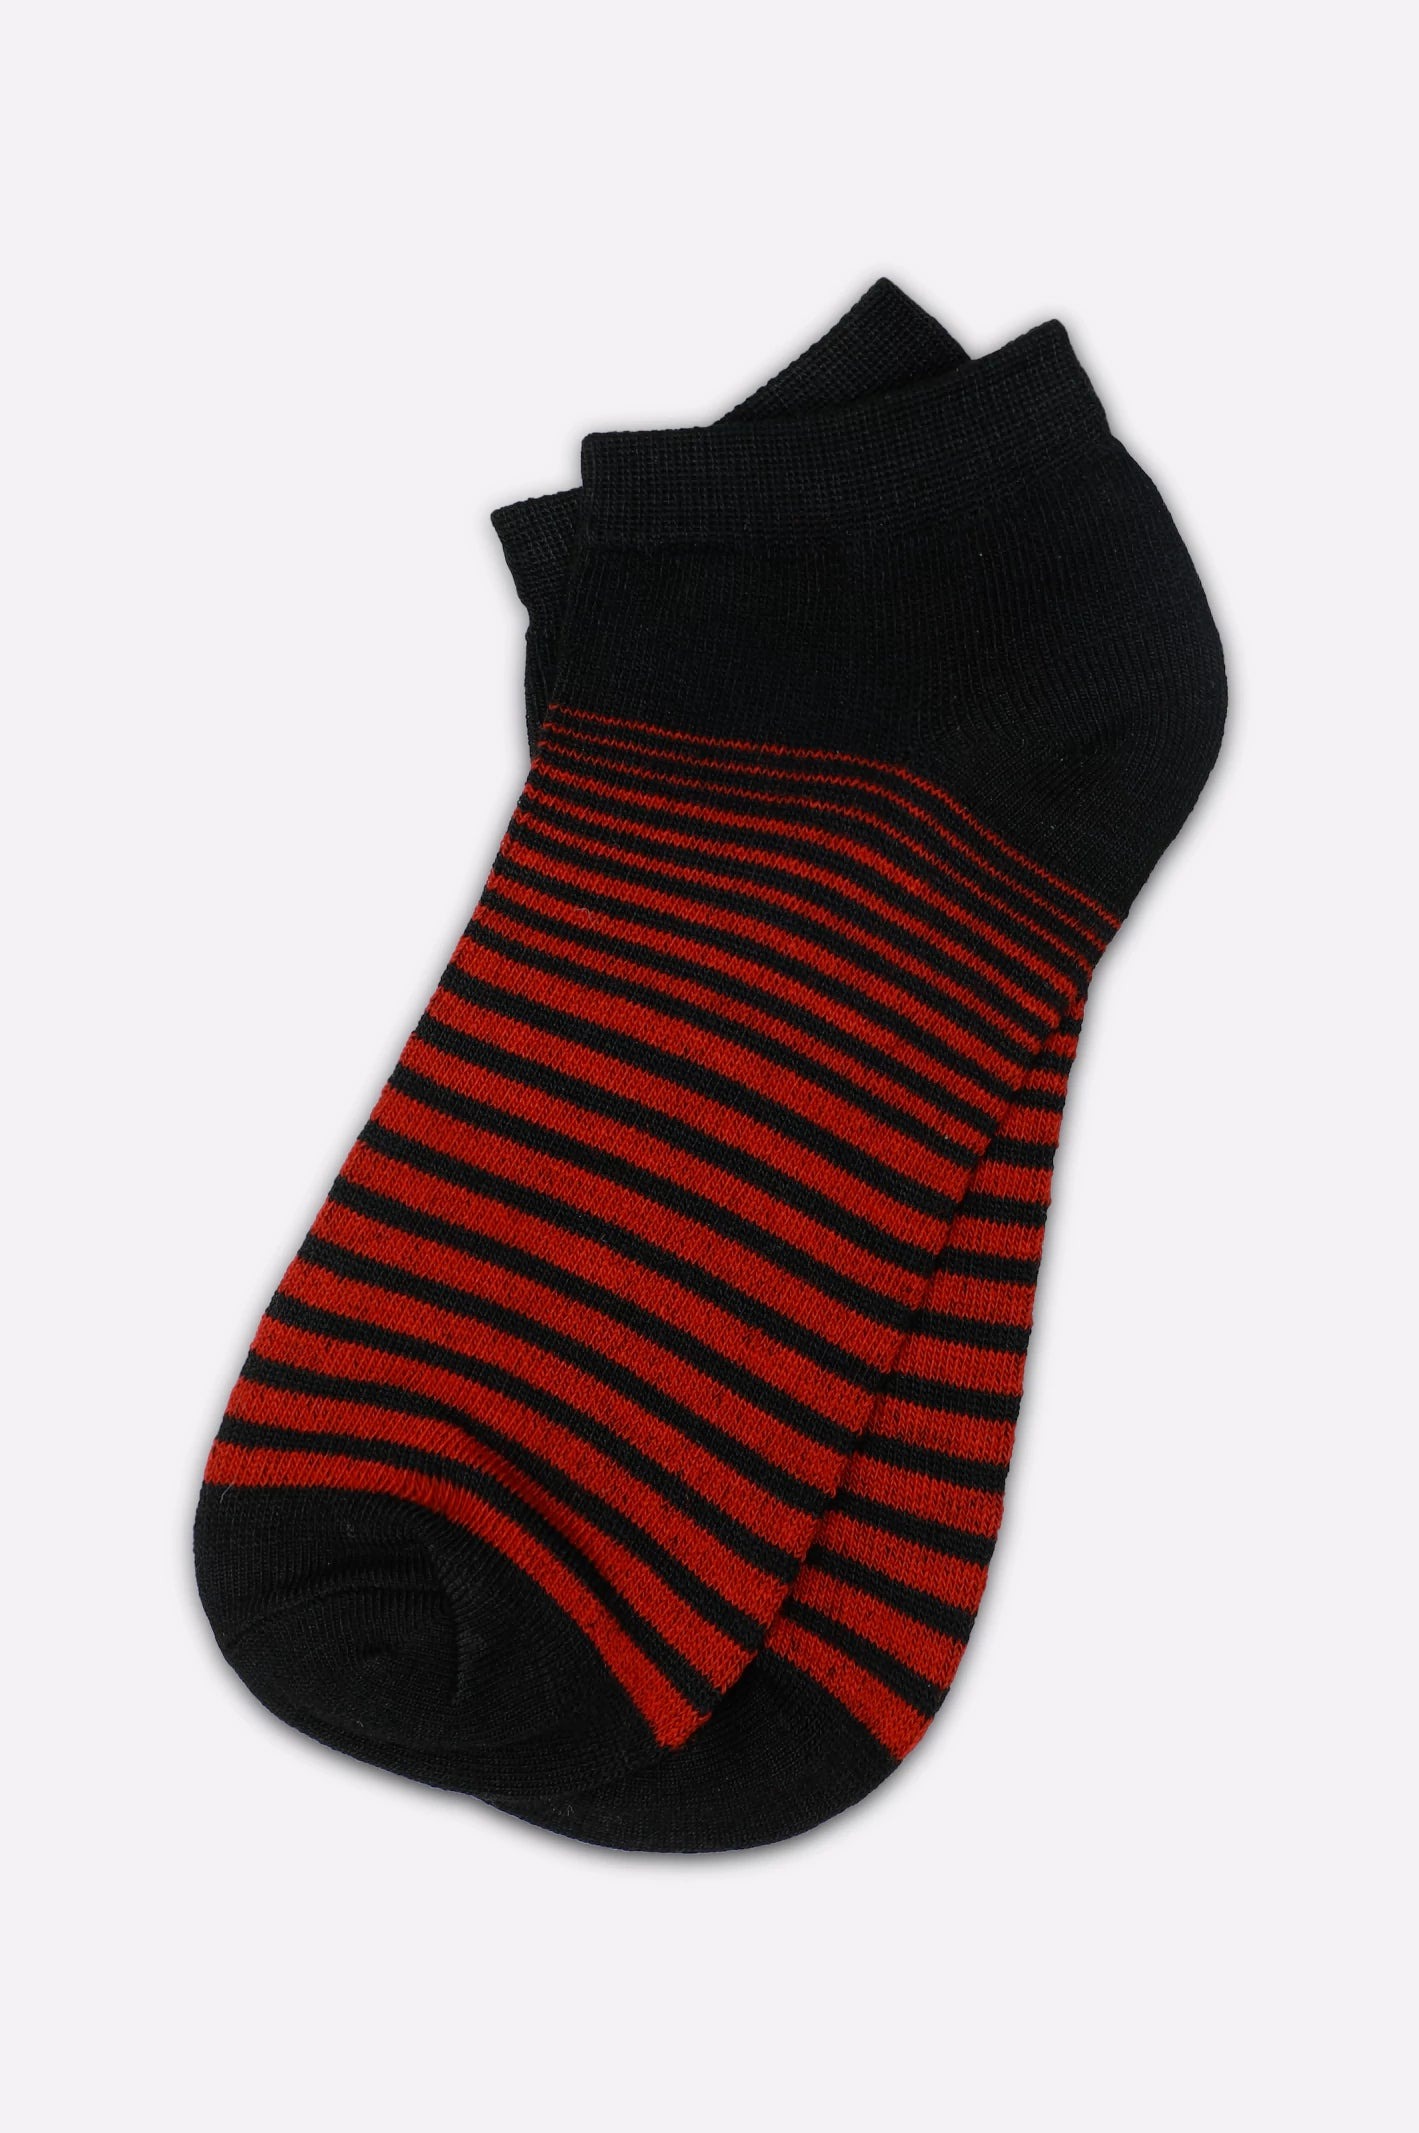 
Red-Ankle-Socks